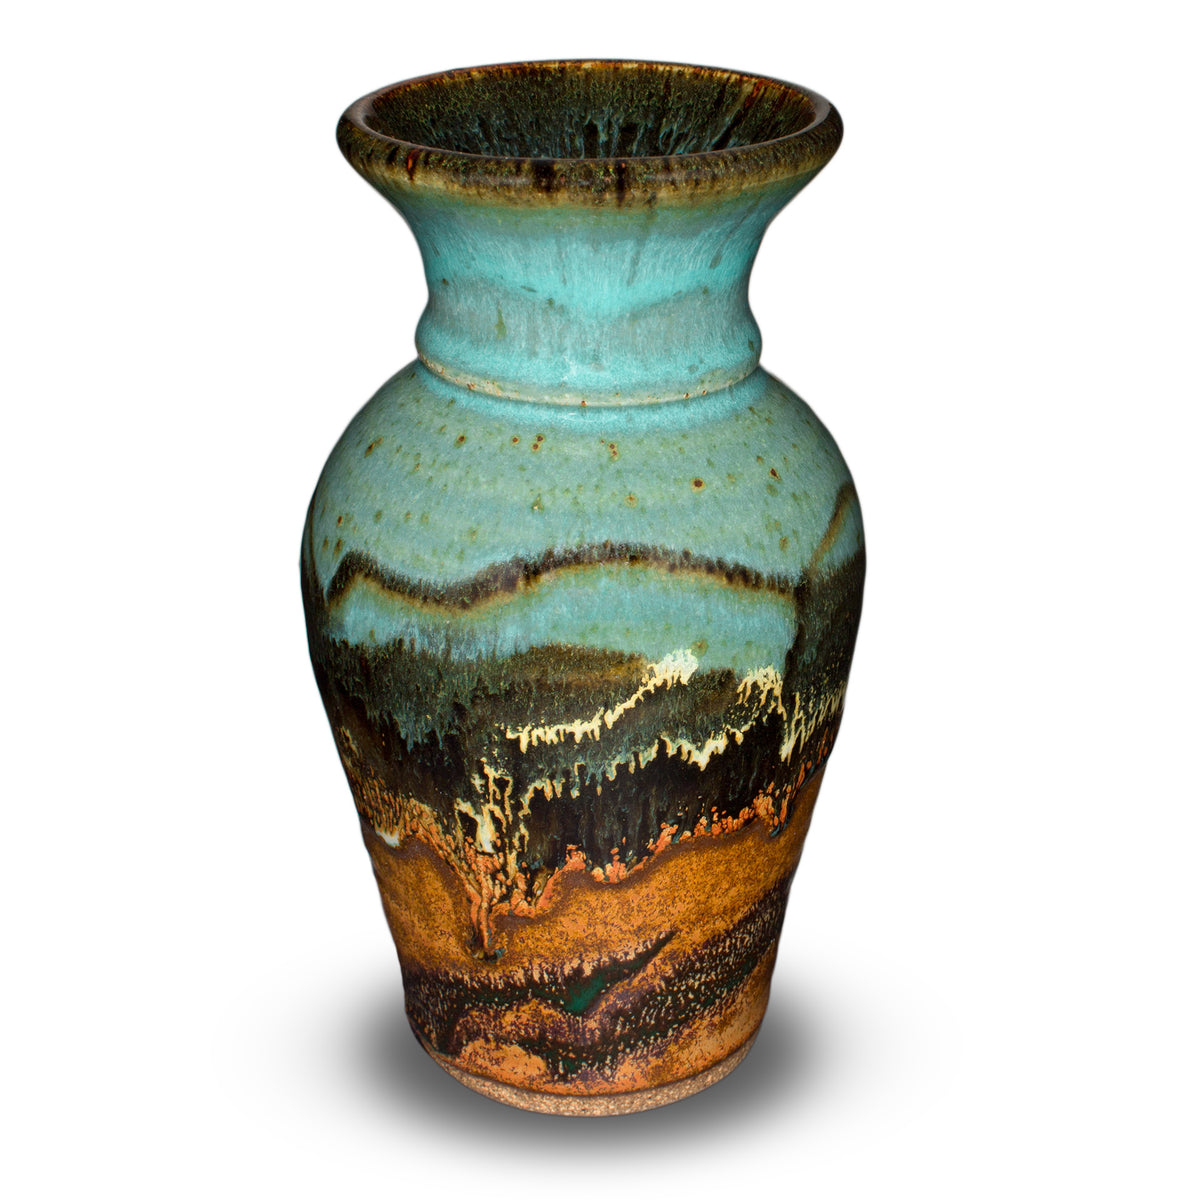 Buy Decorative Vases  Pottery, Turquoise and Minakari